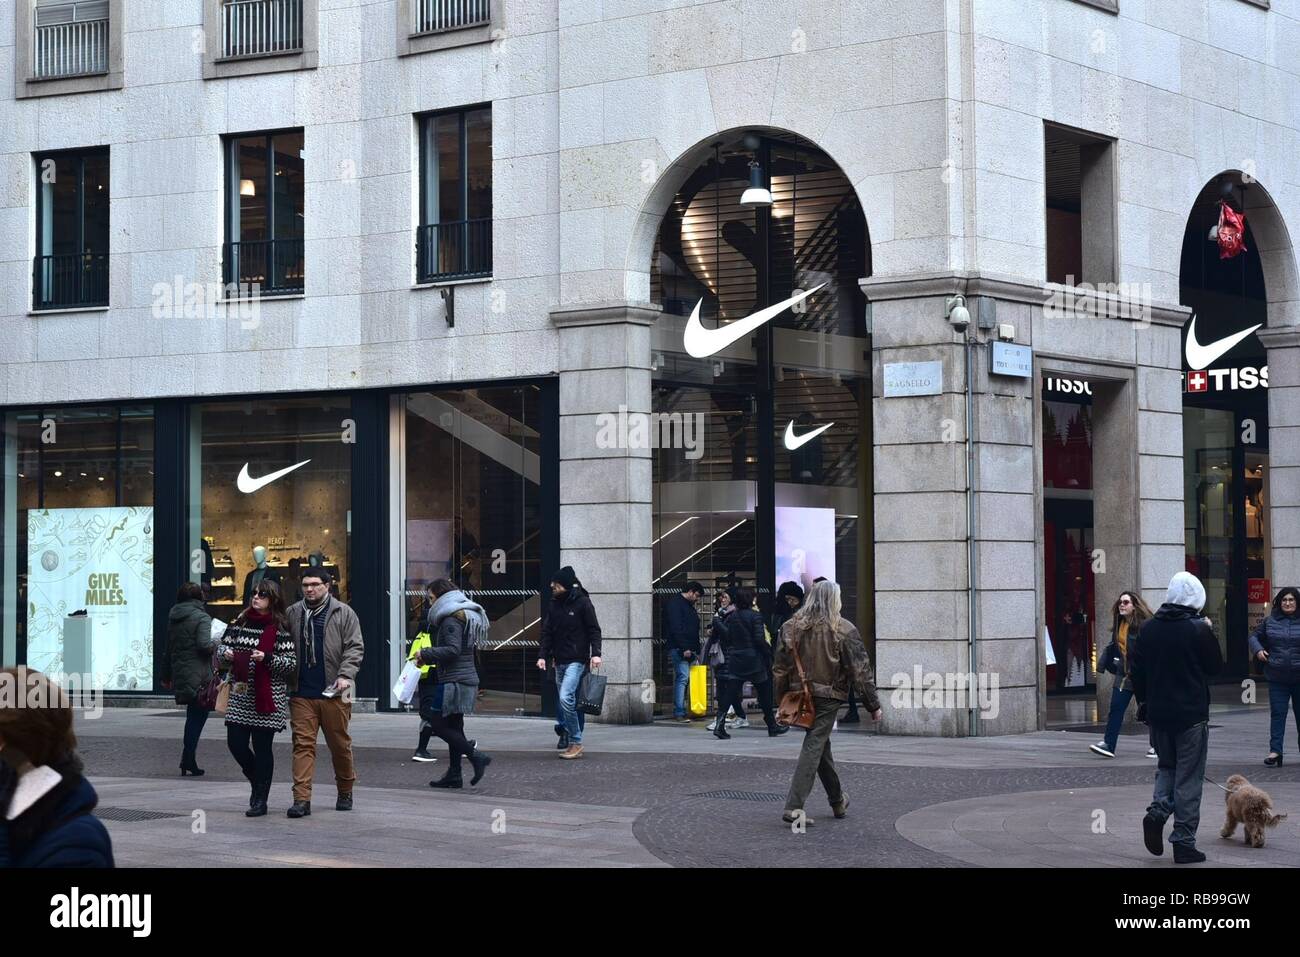 Nike store stock photography - Alamy